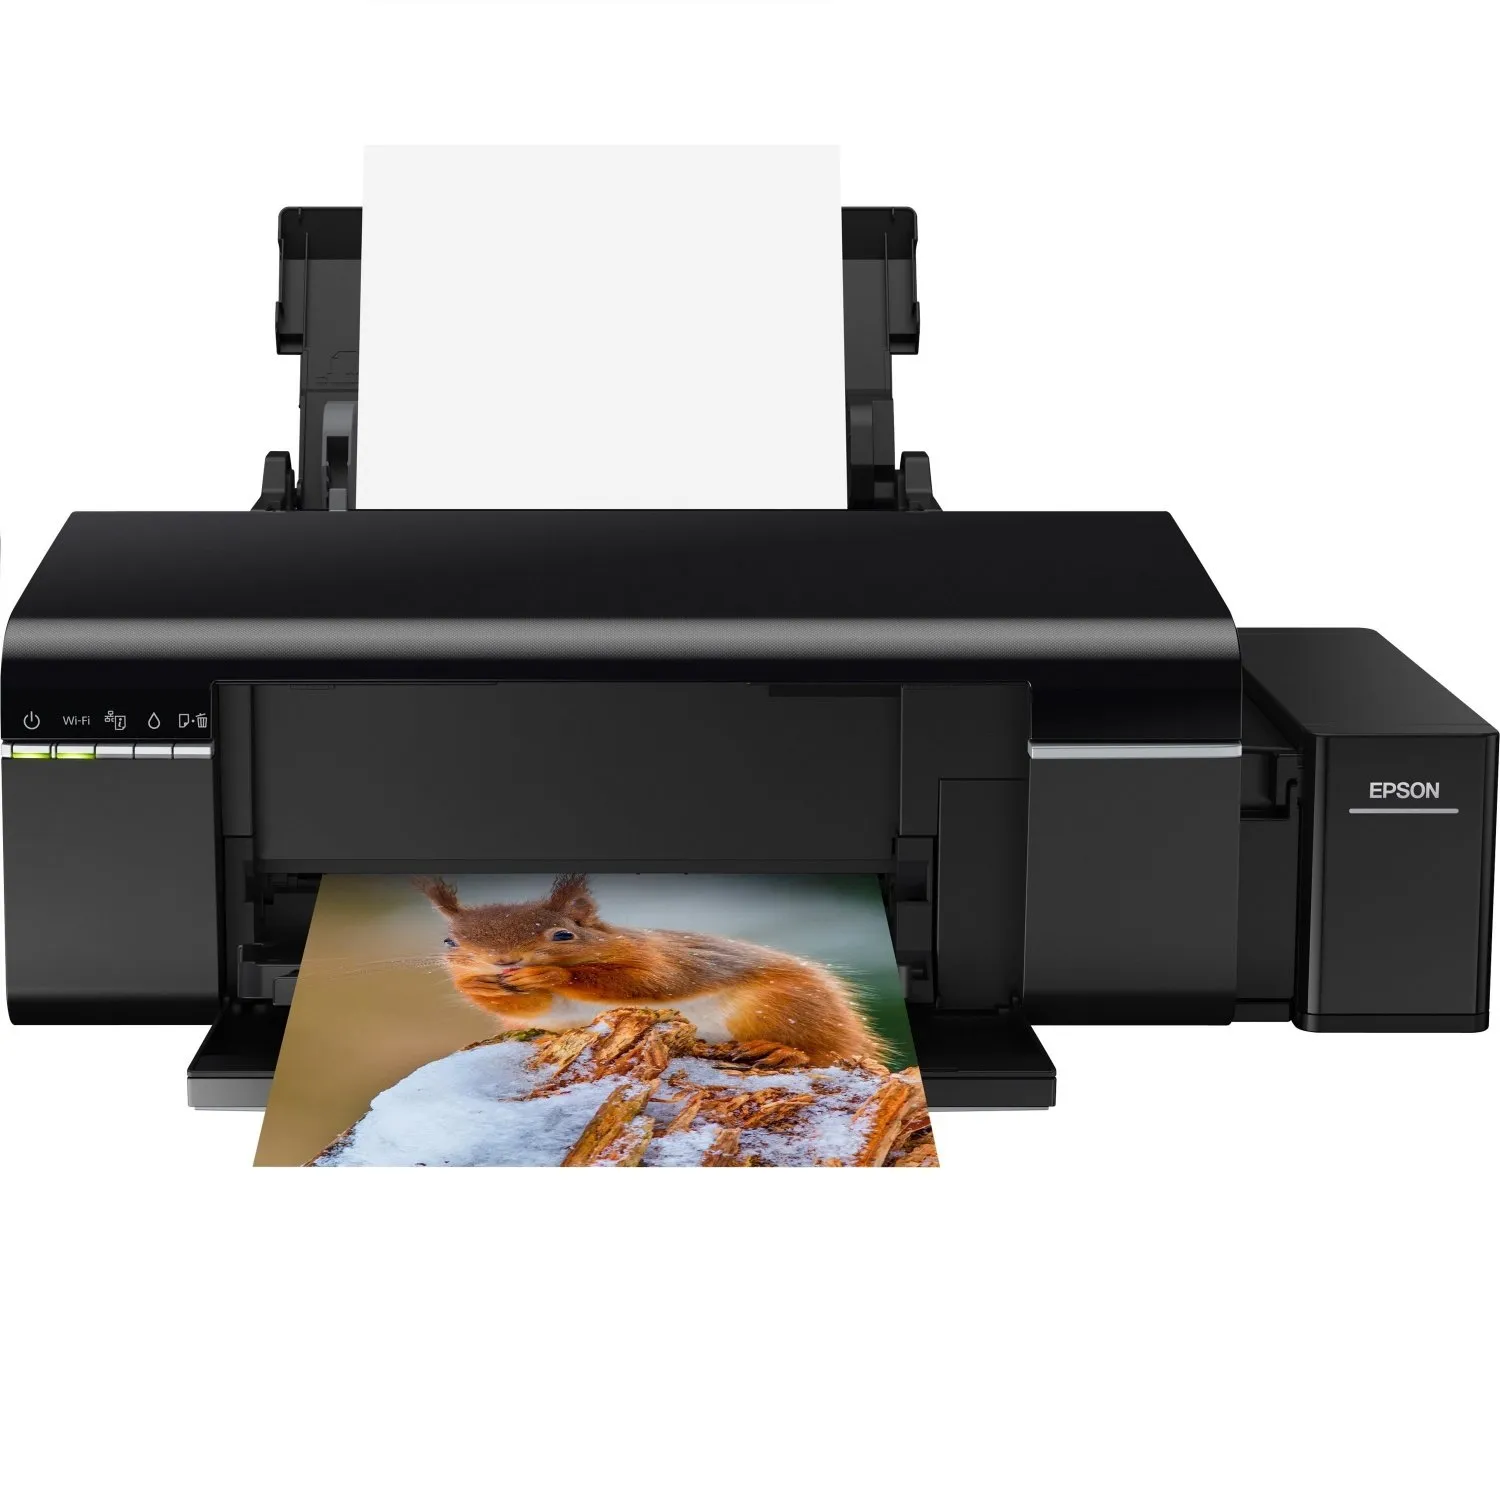 Принтер Epson L805 (A4, 37 стр / мин, 5760 optimized dpi, 6 красок, USB2.0, WiFi)#7